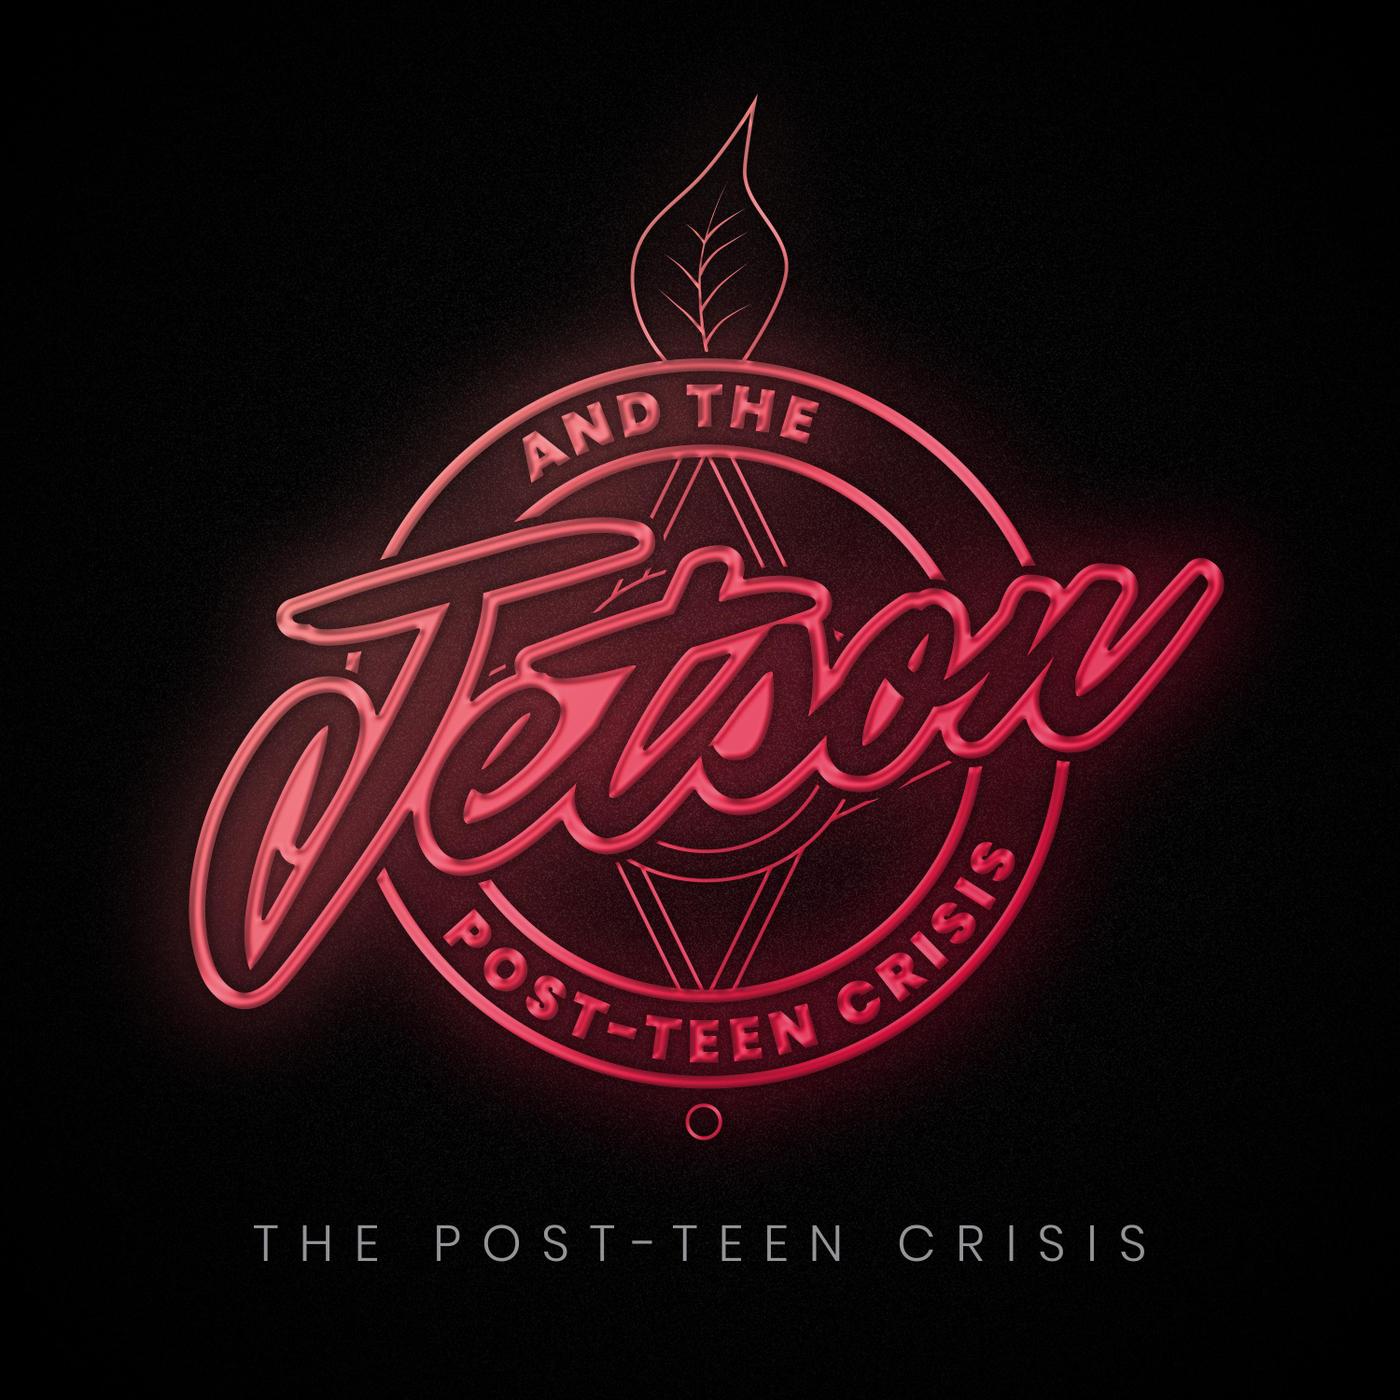 The Post-Teen Crisis